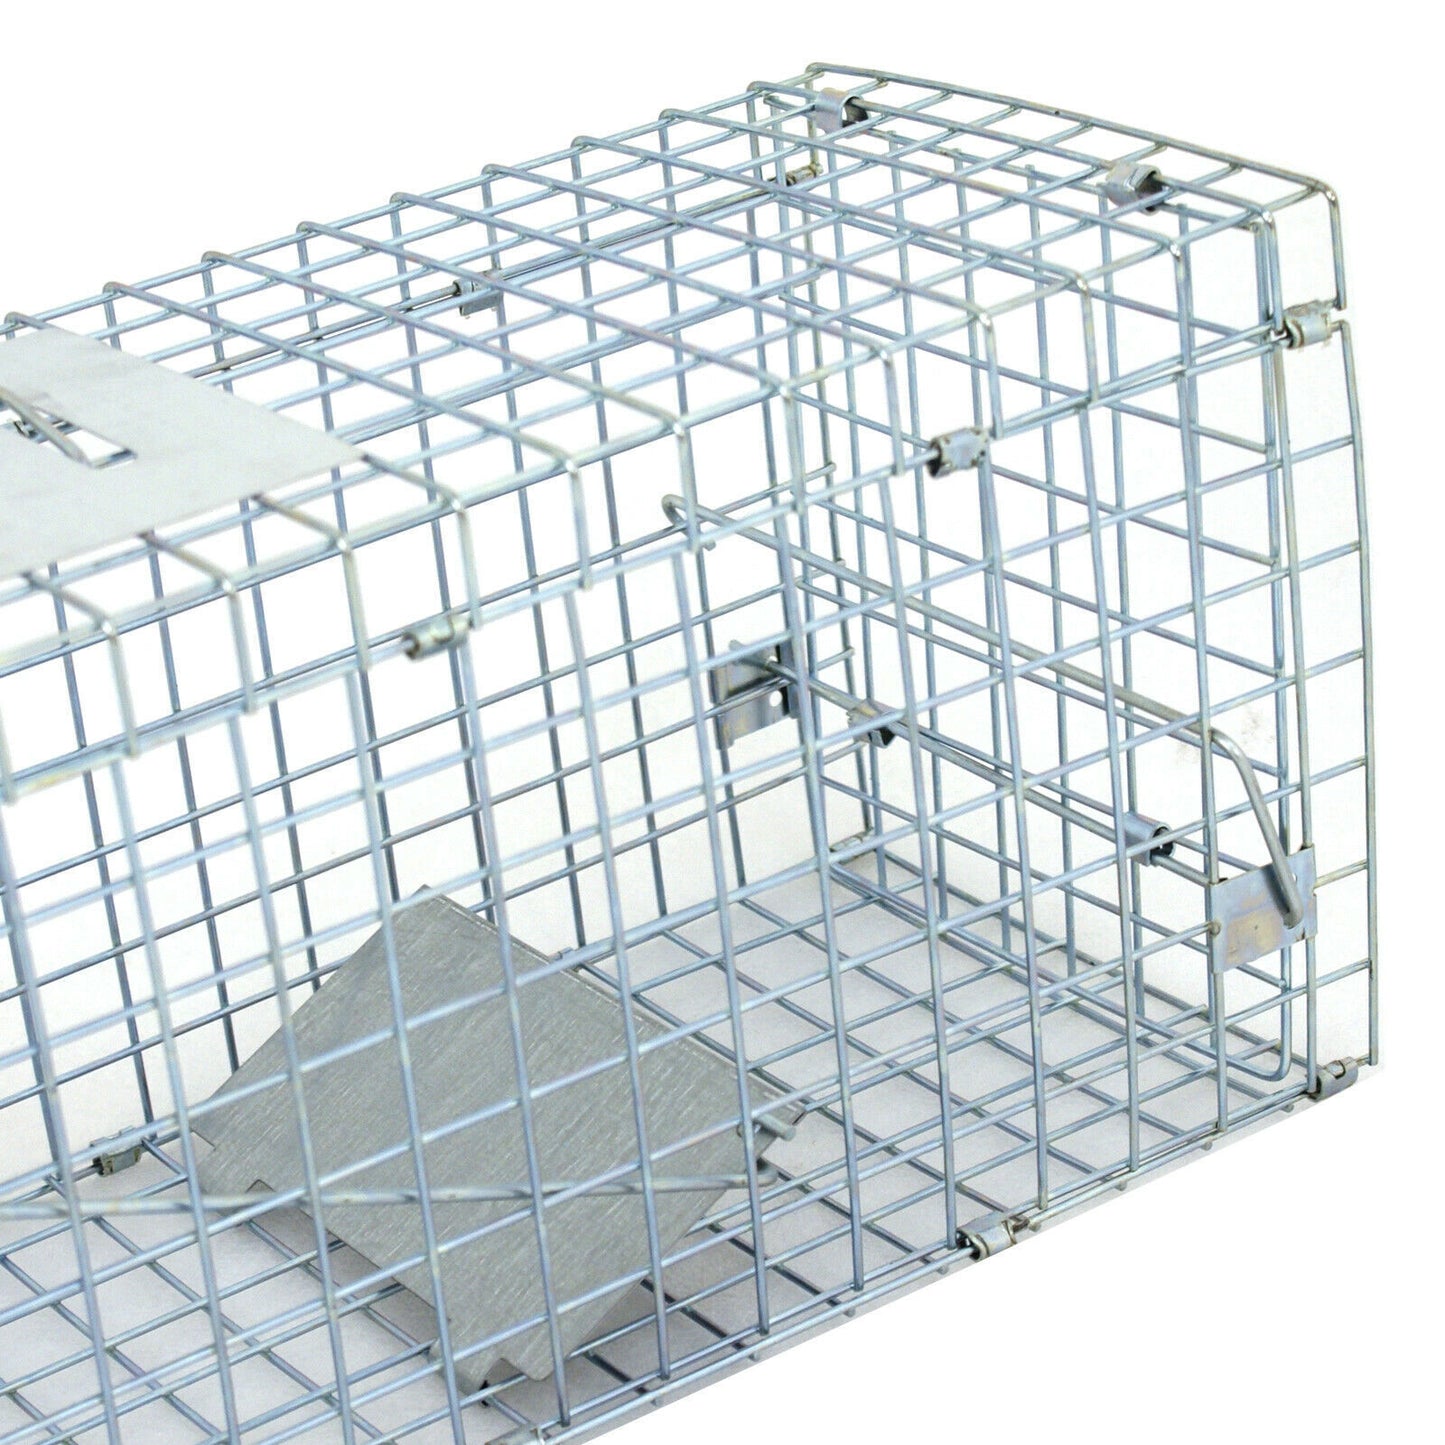 24x8x7.5 Humane Animal Trap Steel Cage Live Rodent Control Skunk Rabbit Opossuml